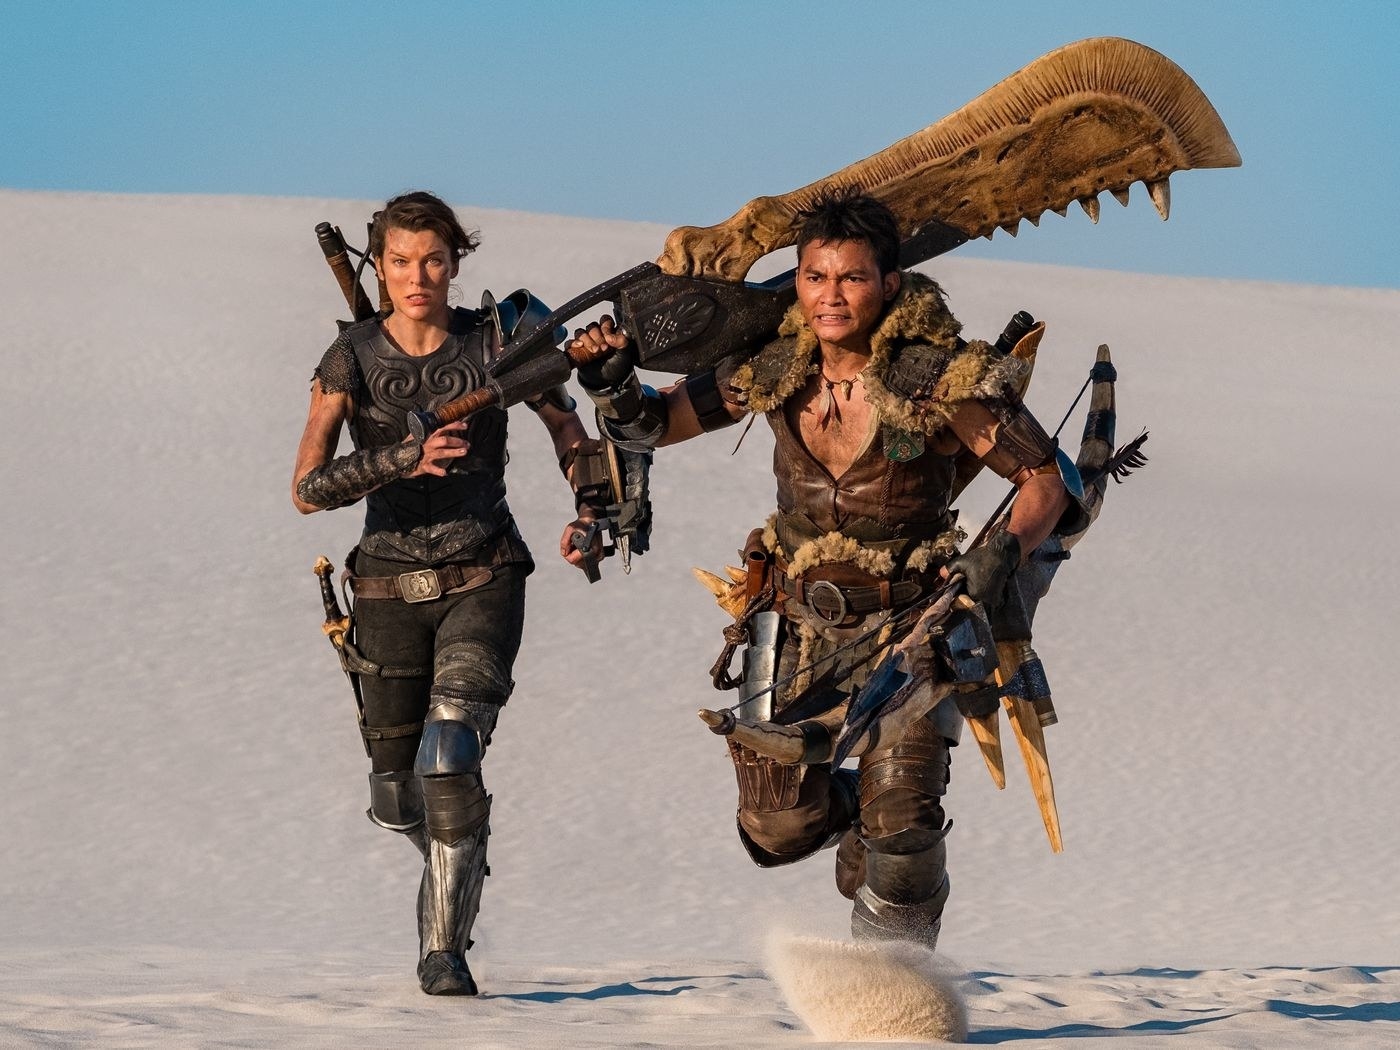 milla jovovich as artemis and tony jaa as the hunter run through the desert